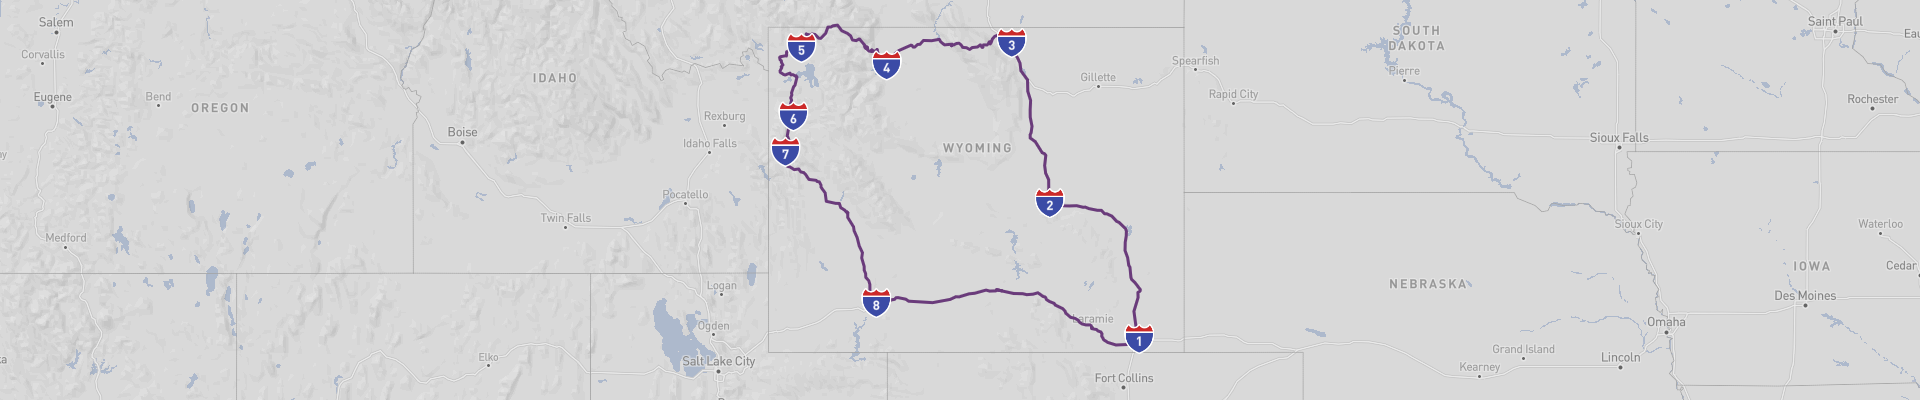 Itinéraire Wyoming 